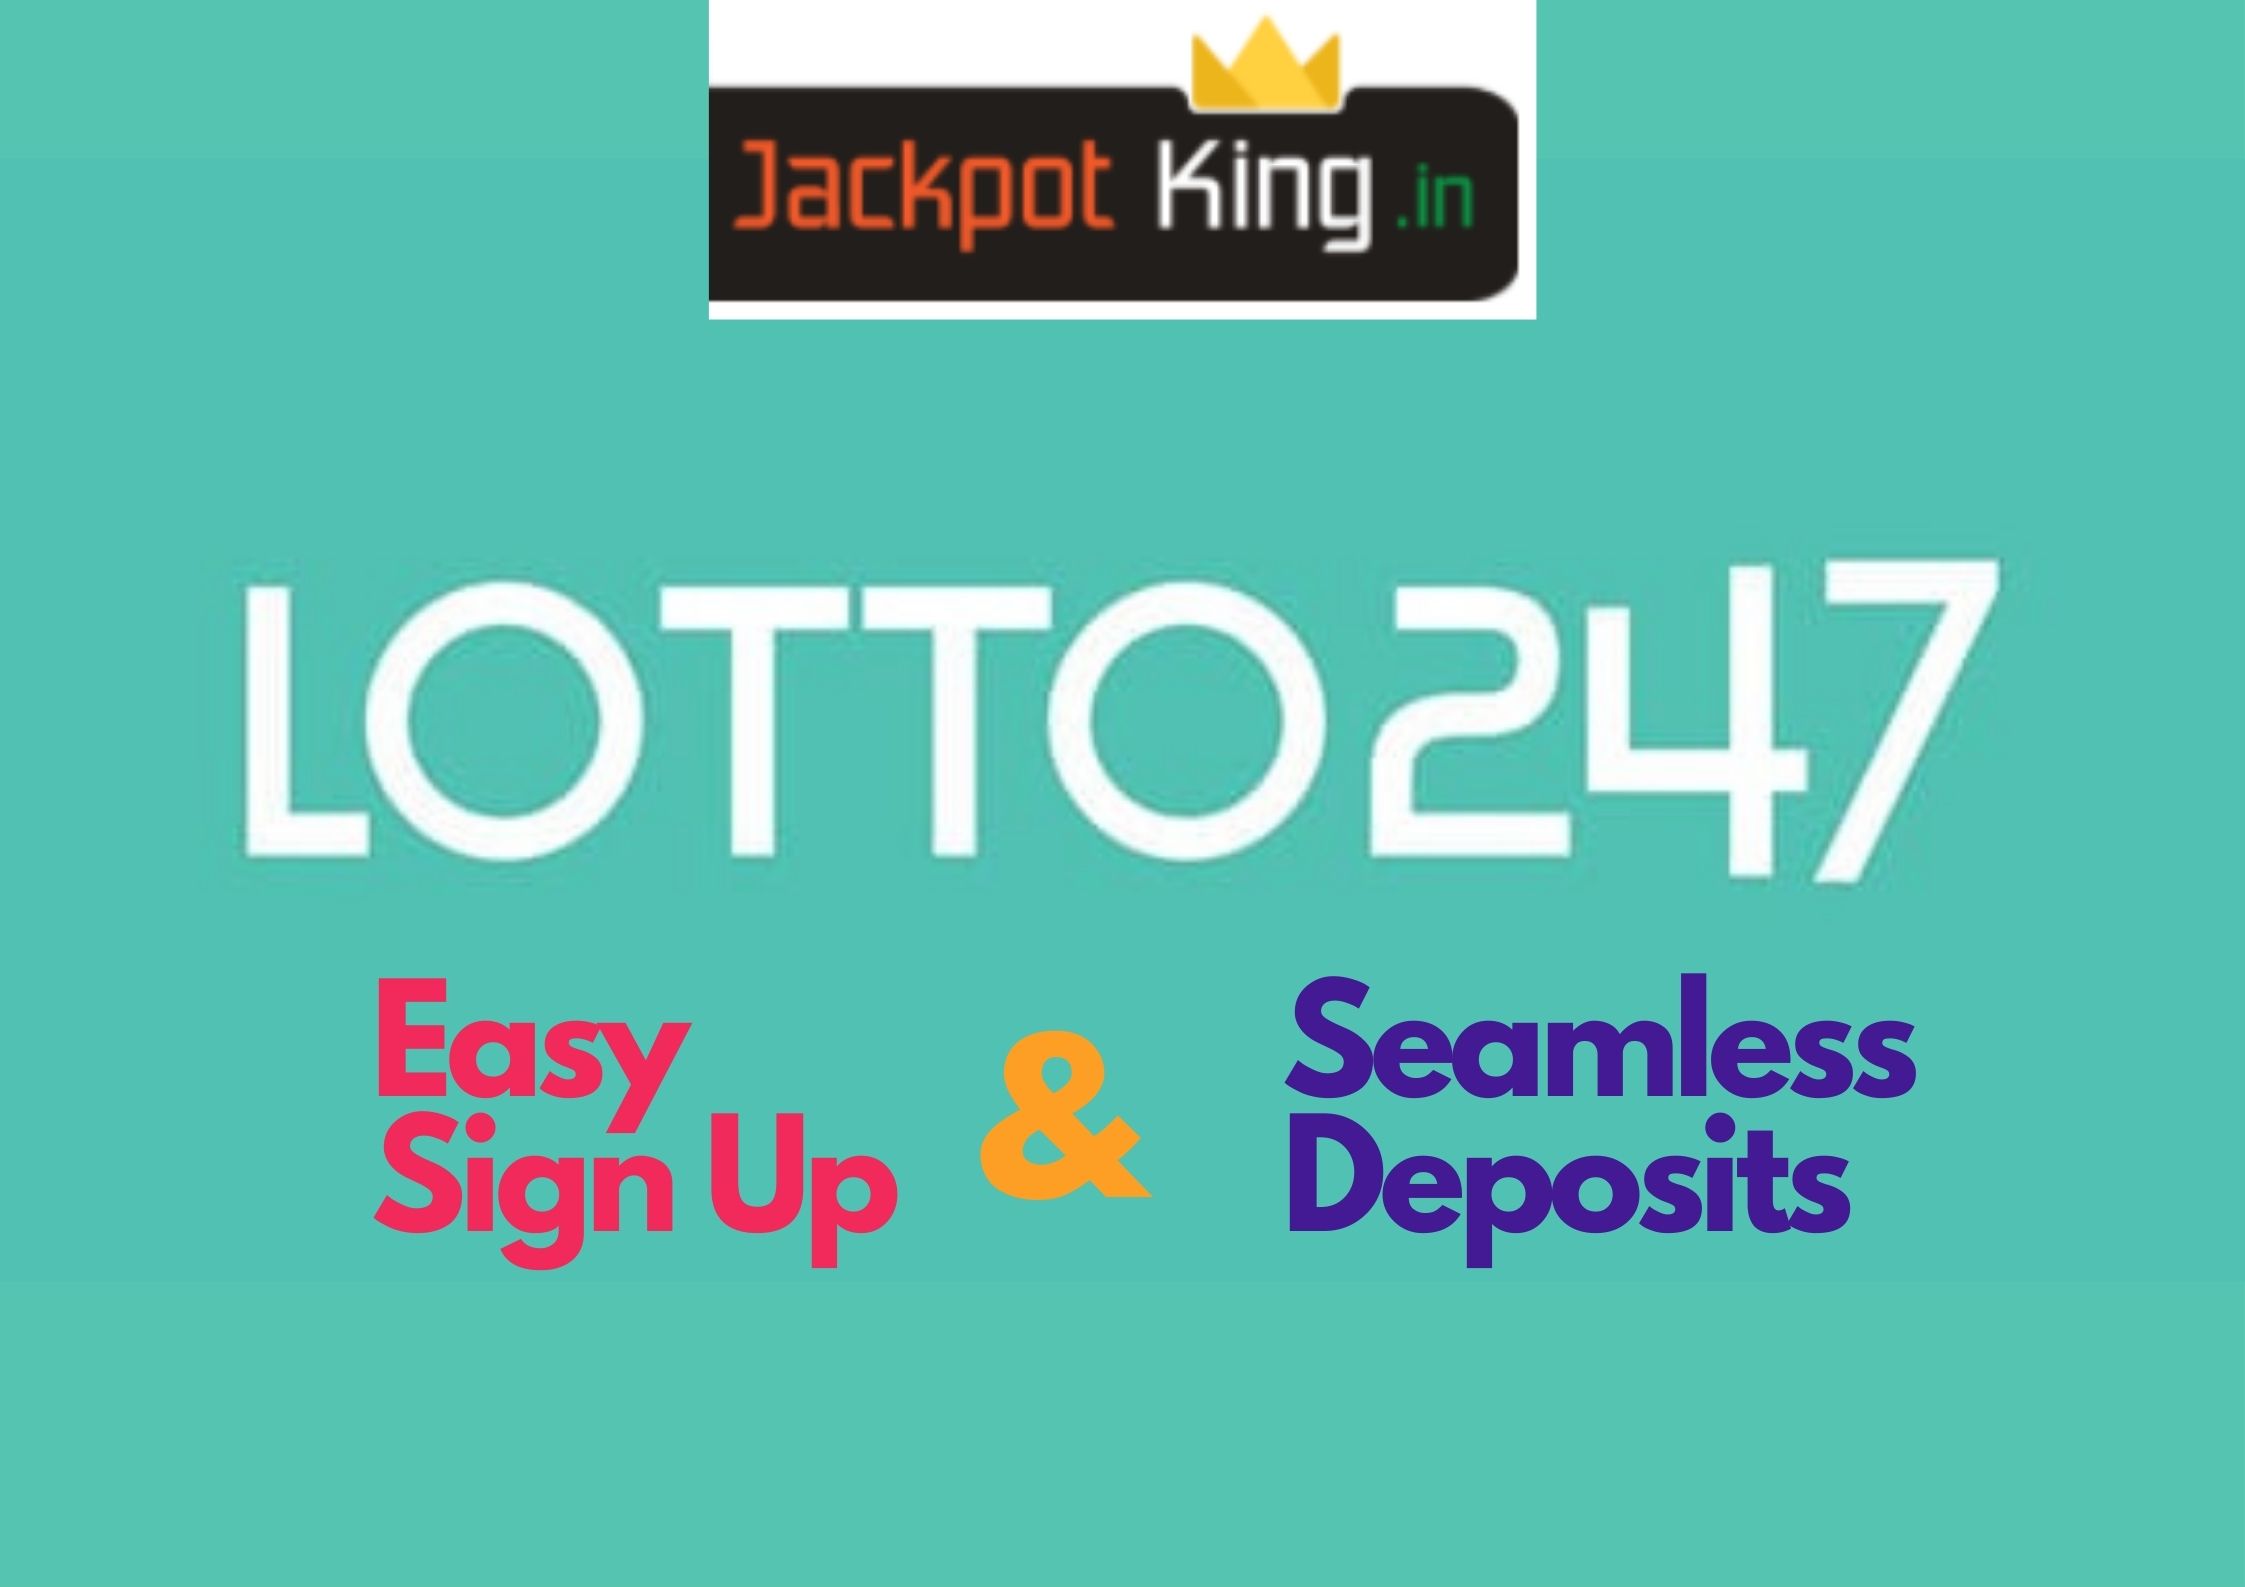 Lotto 247 Sign & Deposit